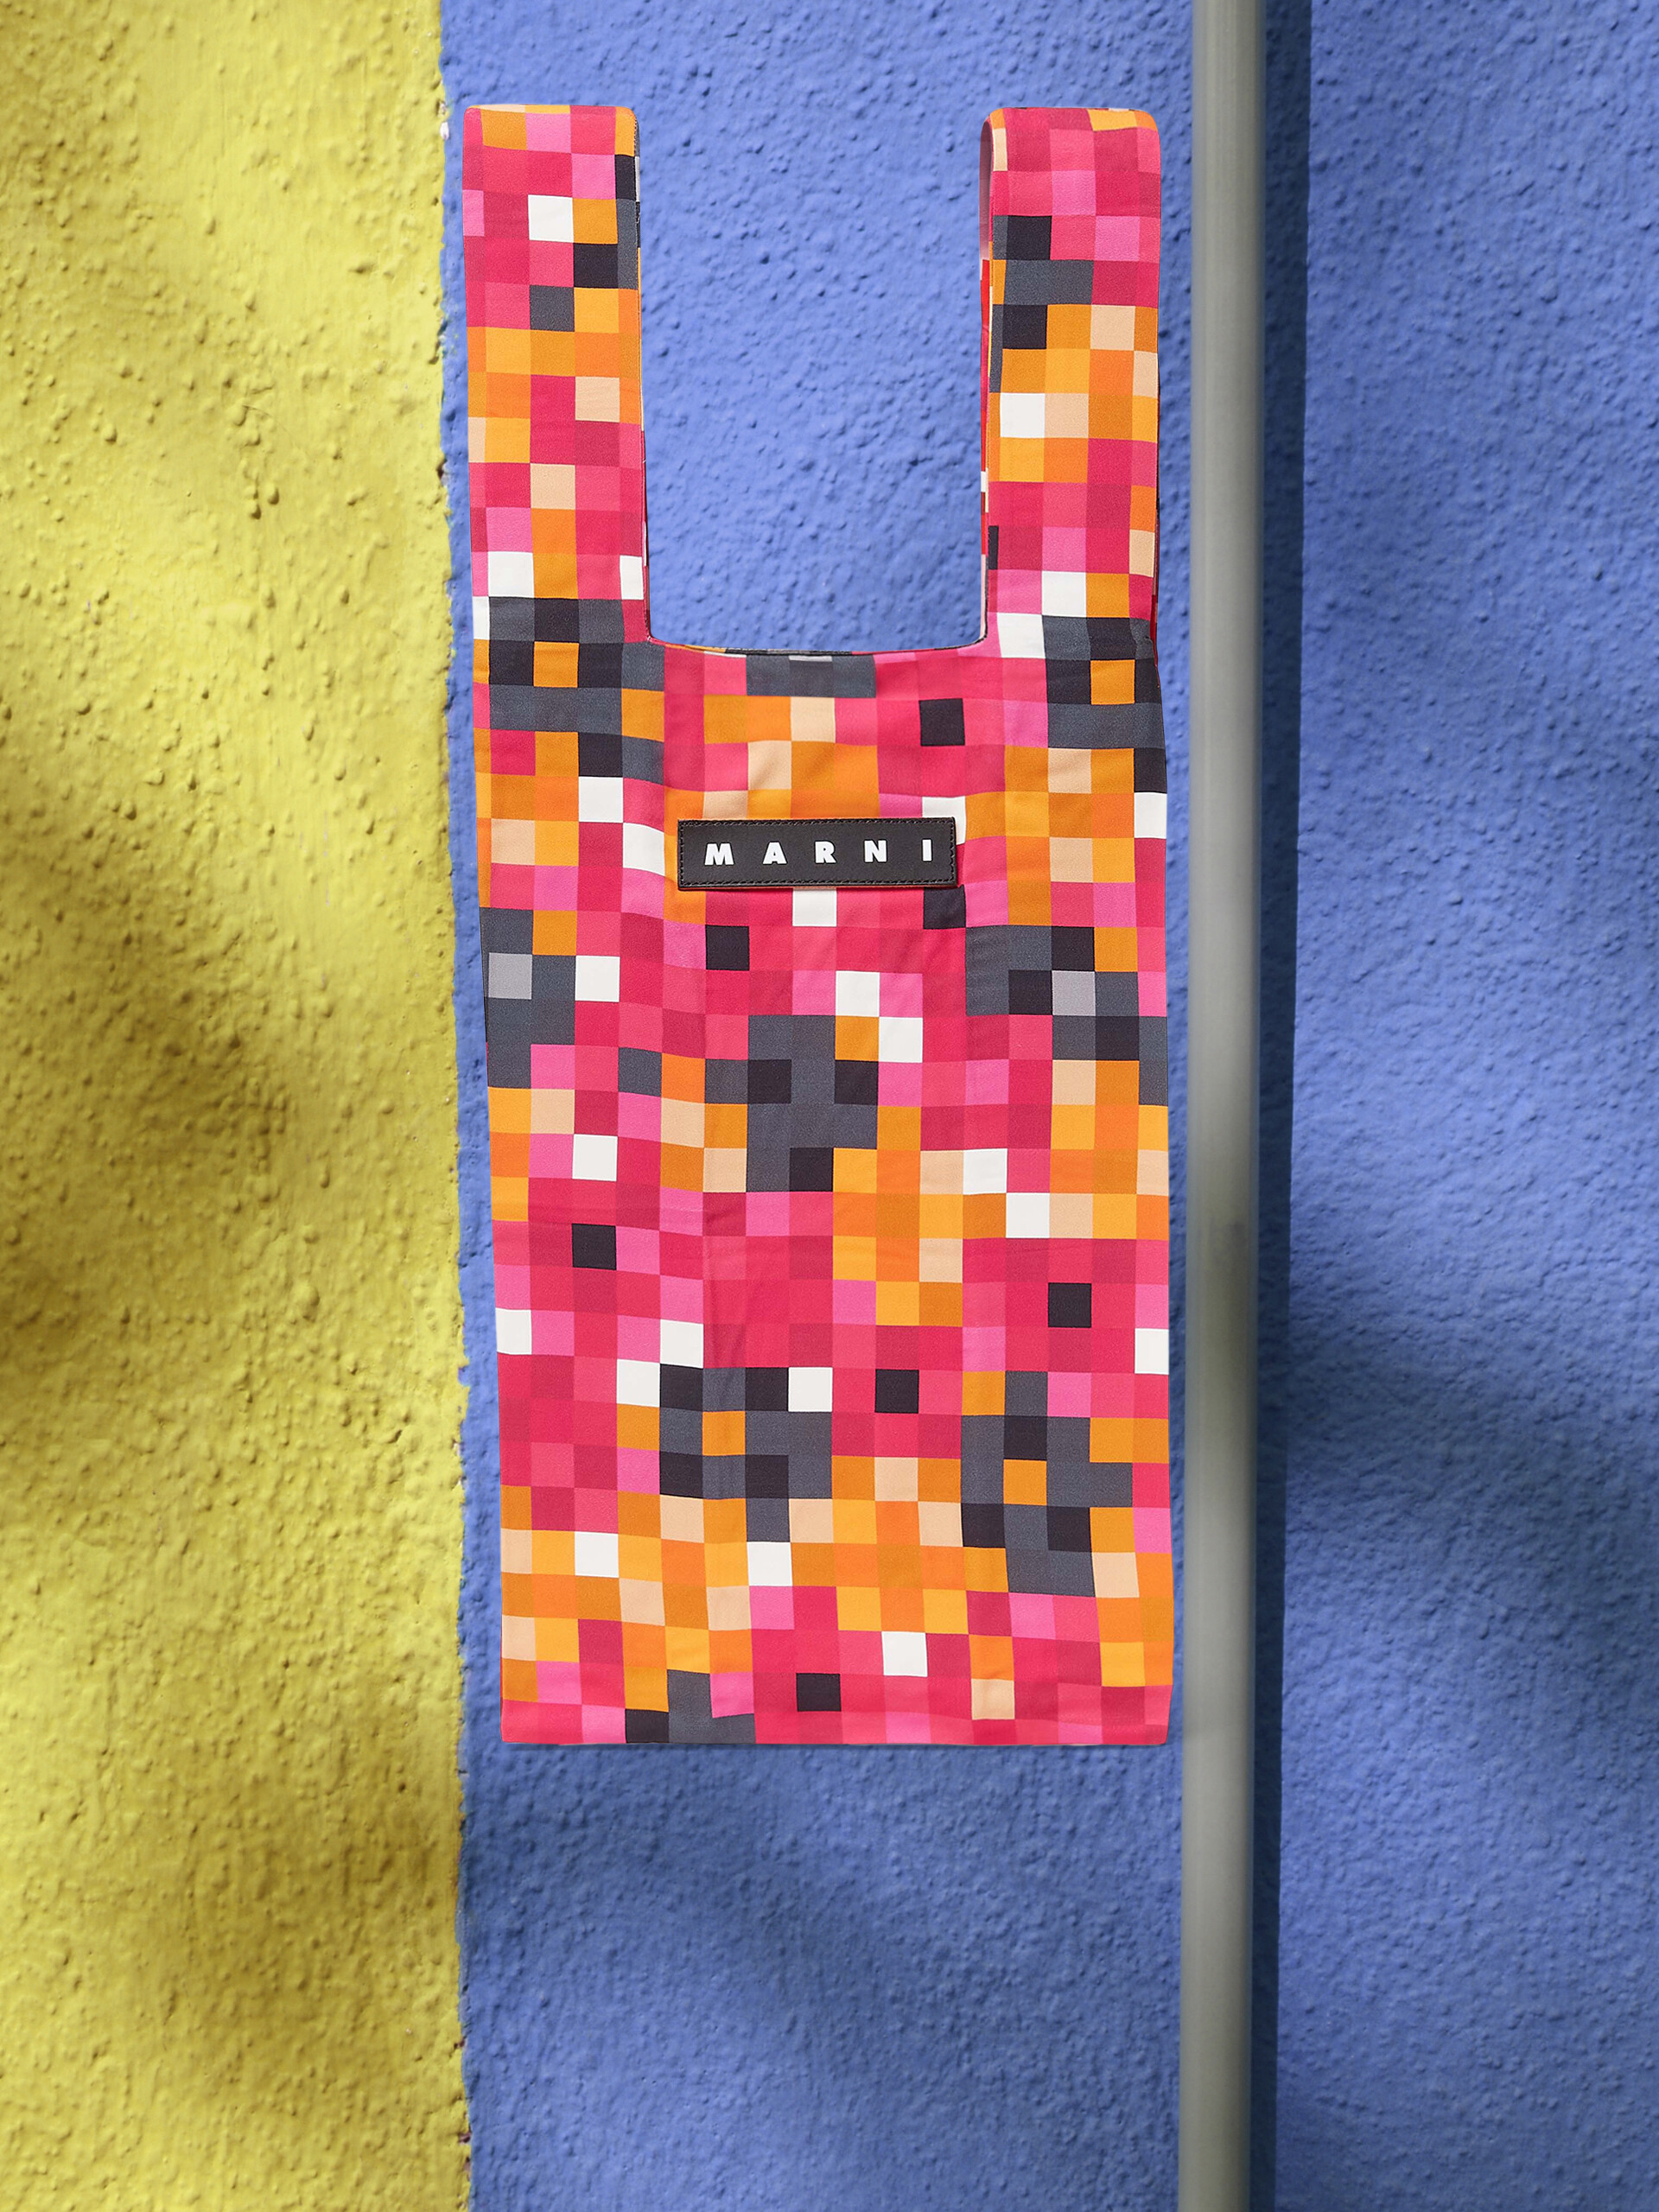 MARNI MARKET shopping bag with pixel print - Shopping Bags - Image 1